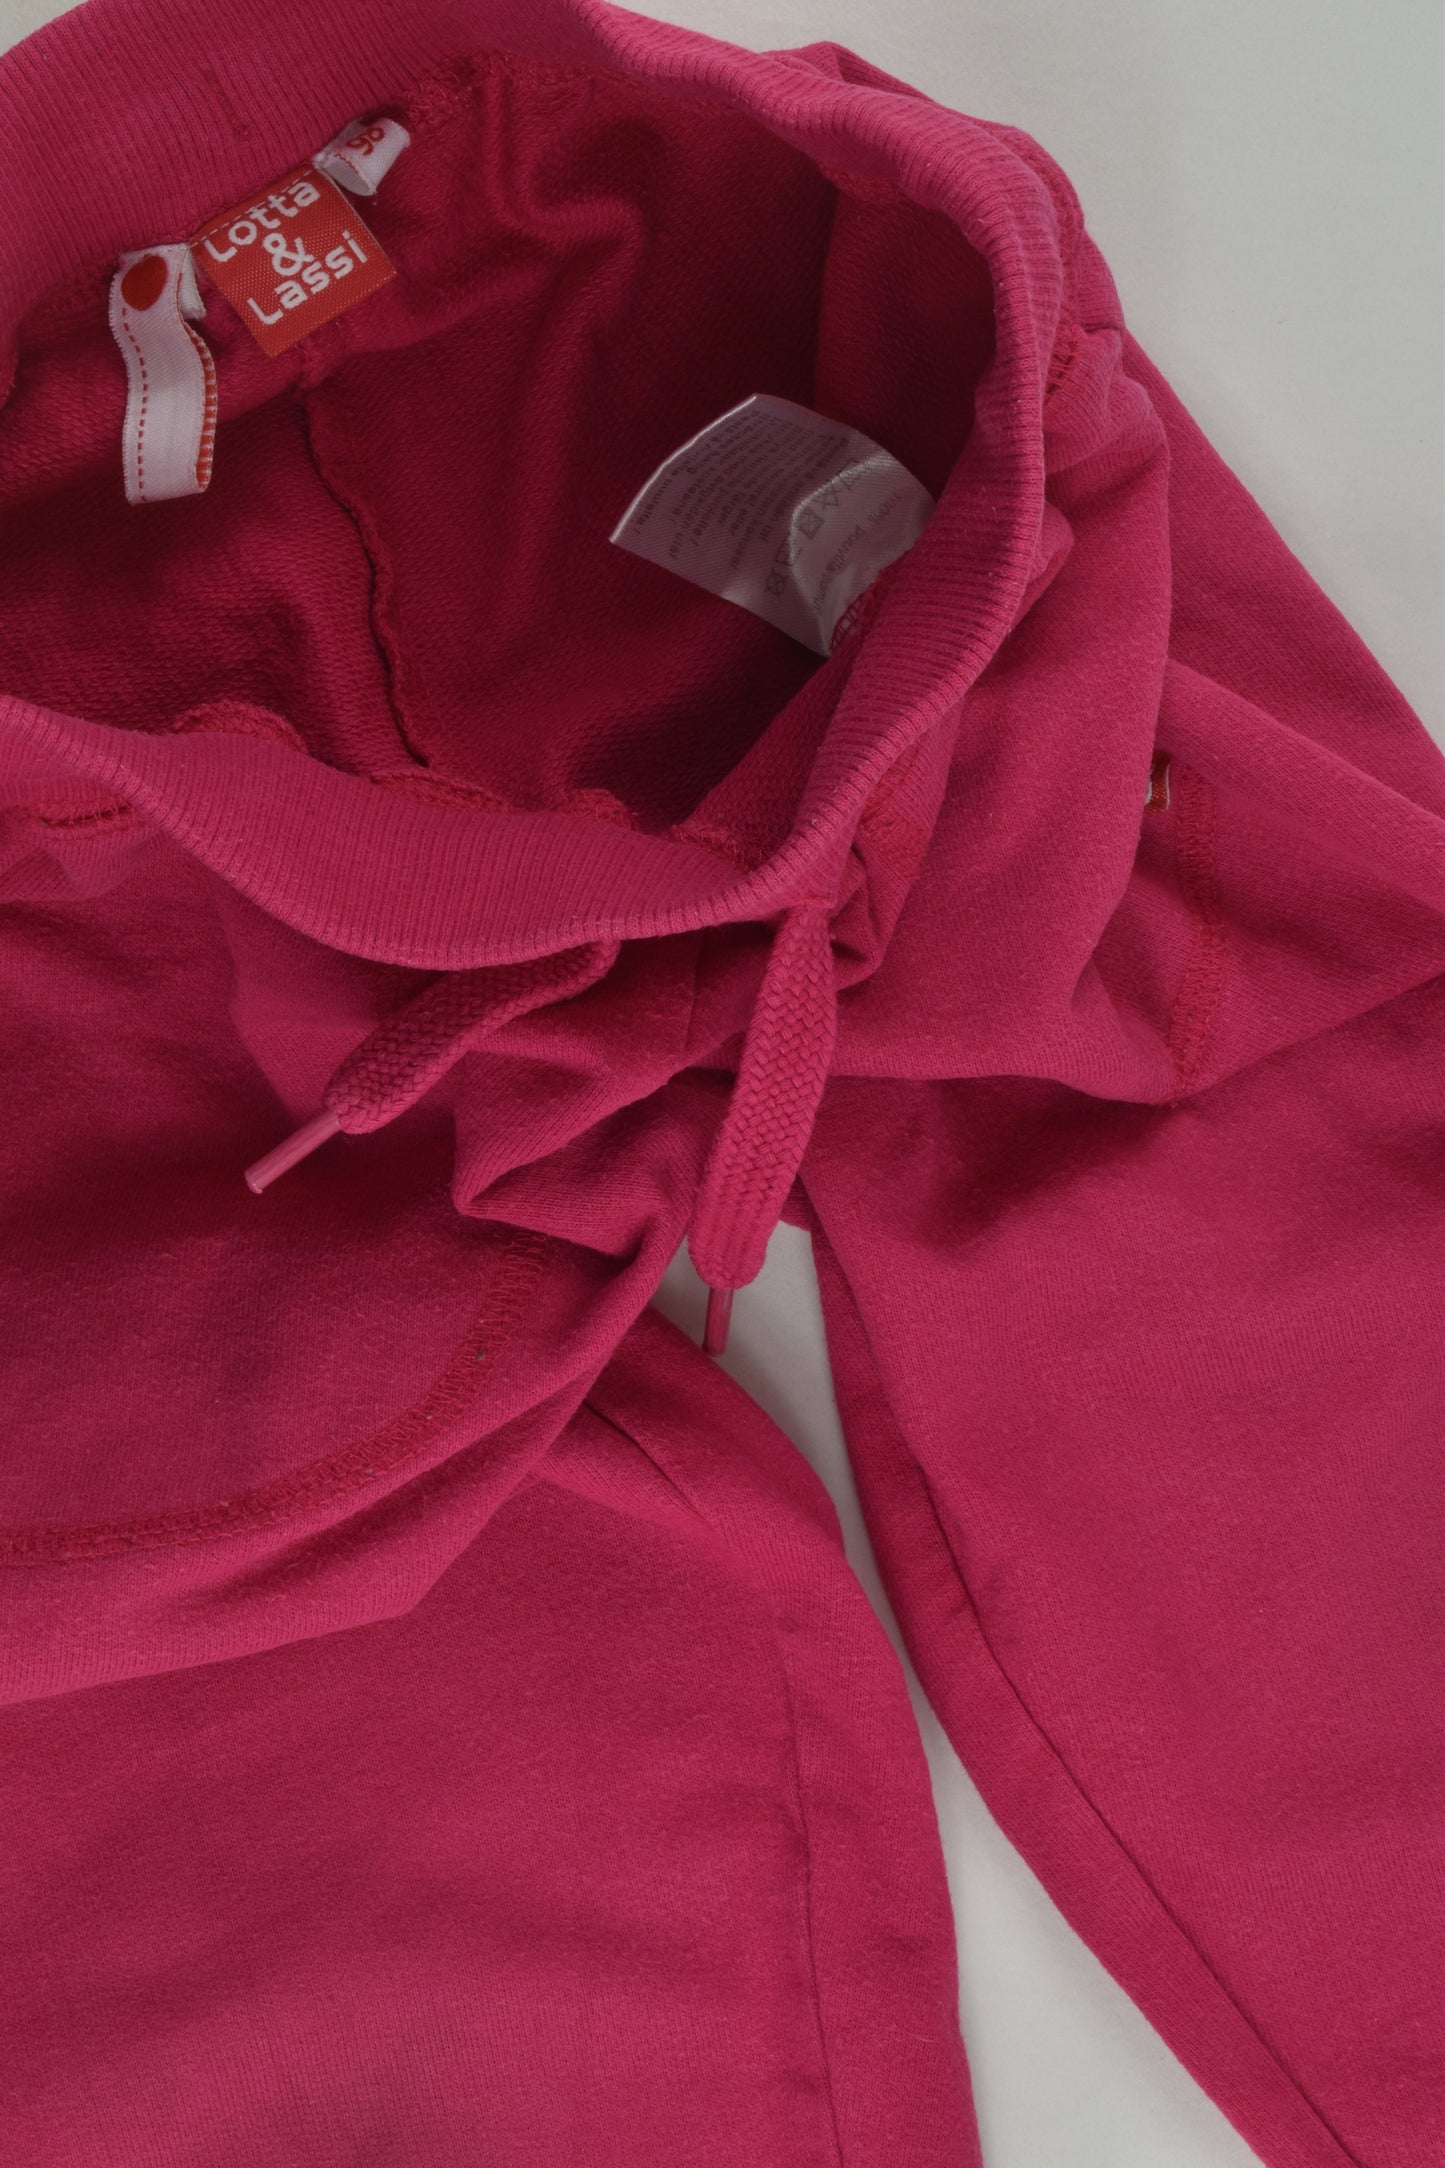 Lotta & Lassi Size 3 (98 cm) Pink Track Pants